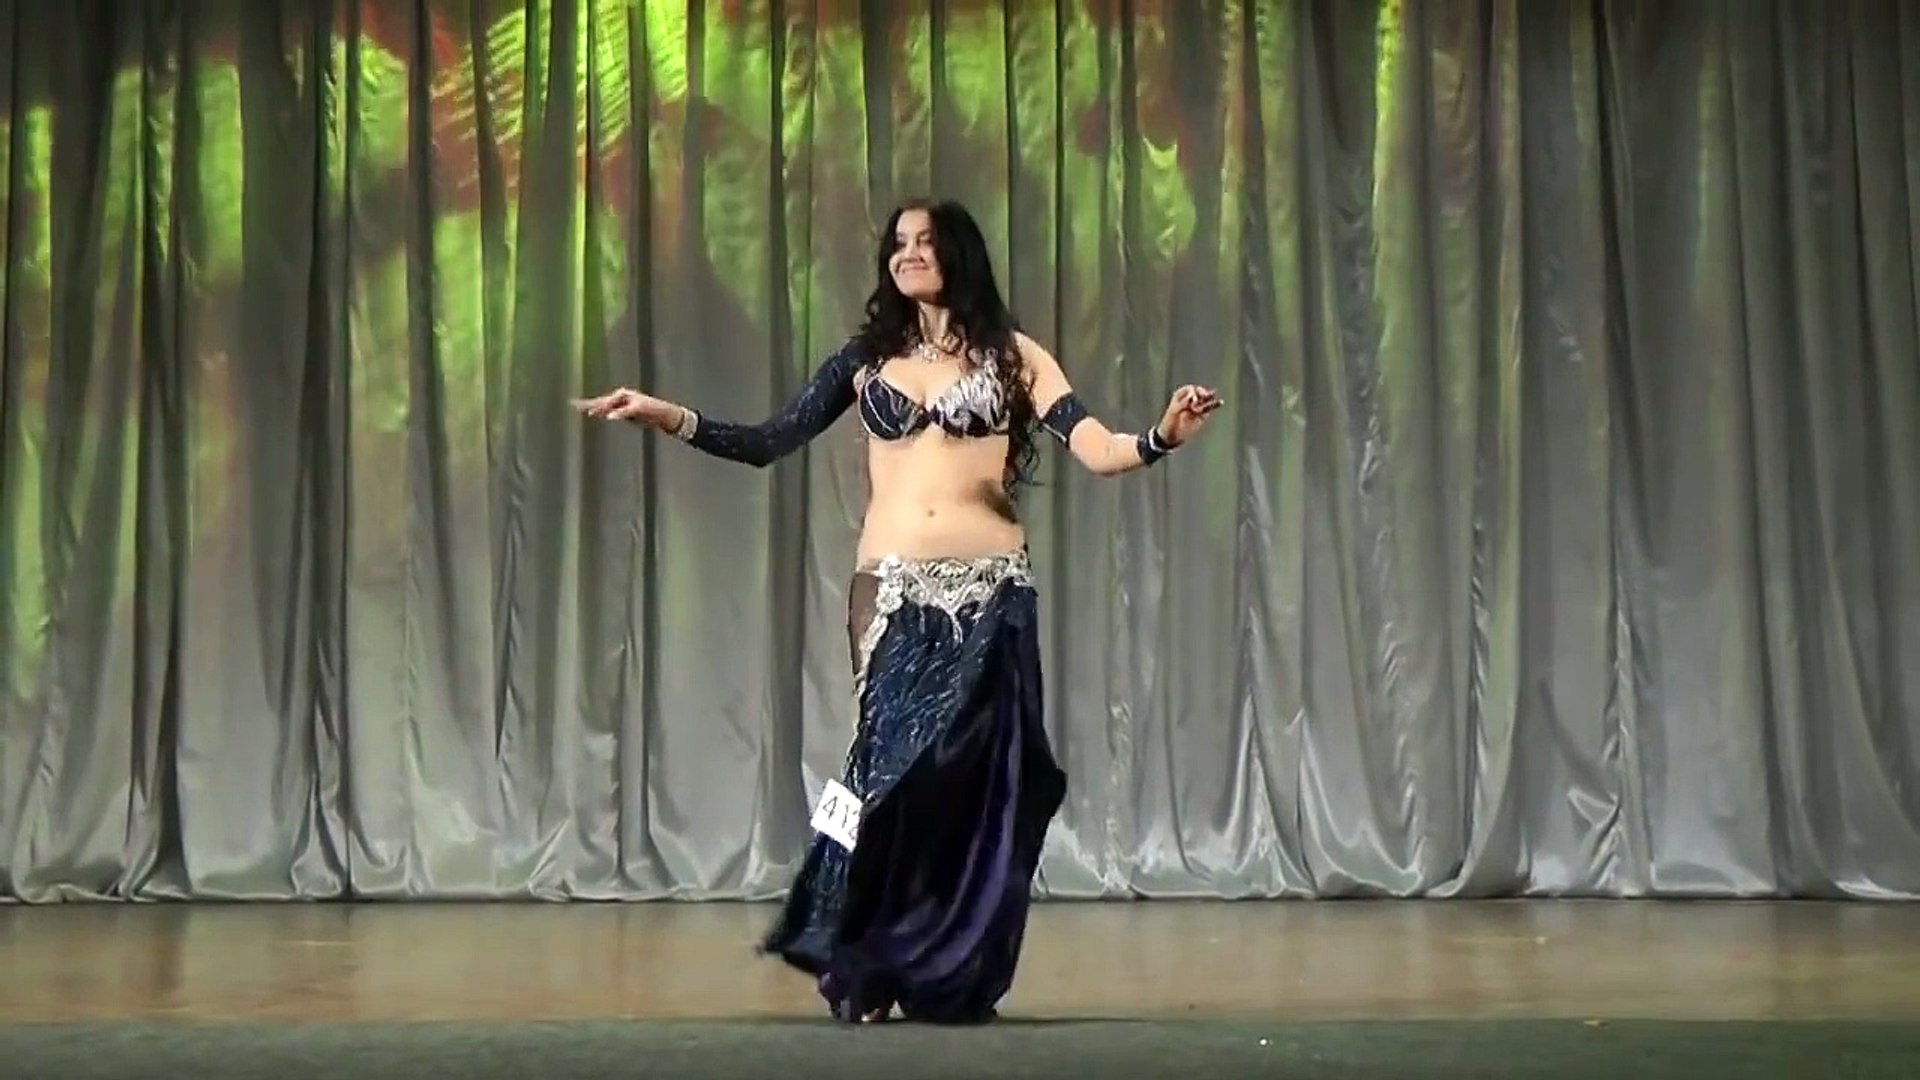 Super Hot Sensational Arabic Belly Dance Alex Delora HD Video - video  Dailymotion